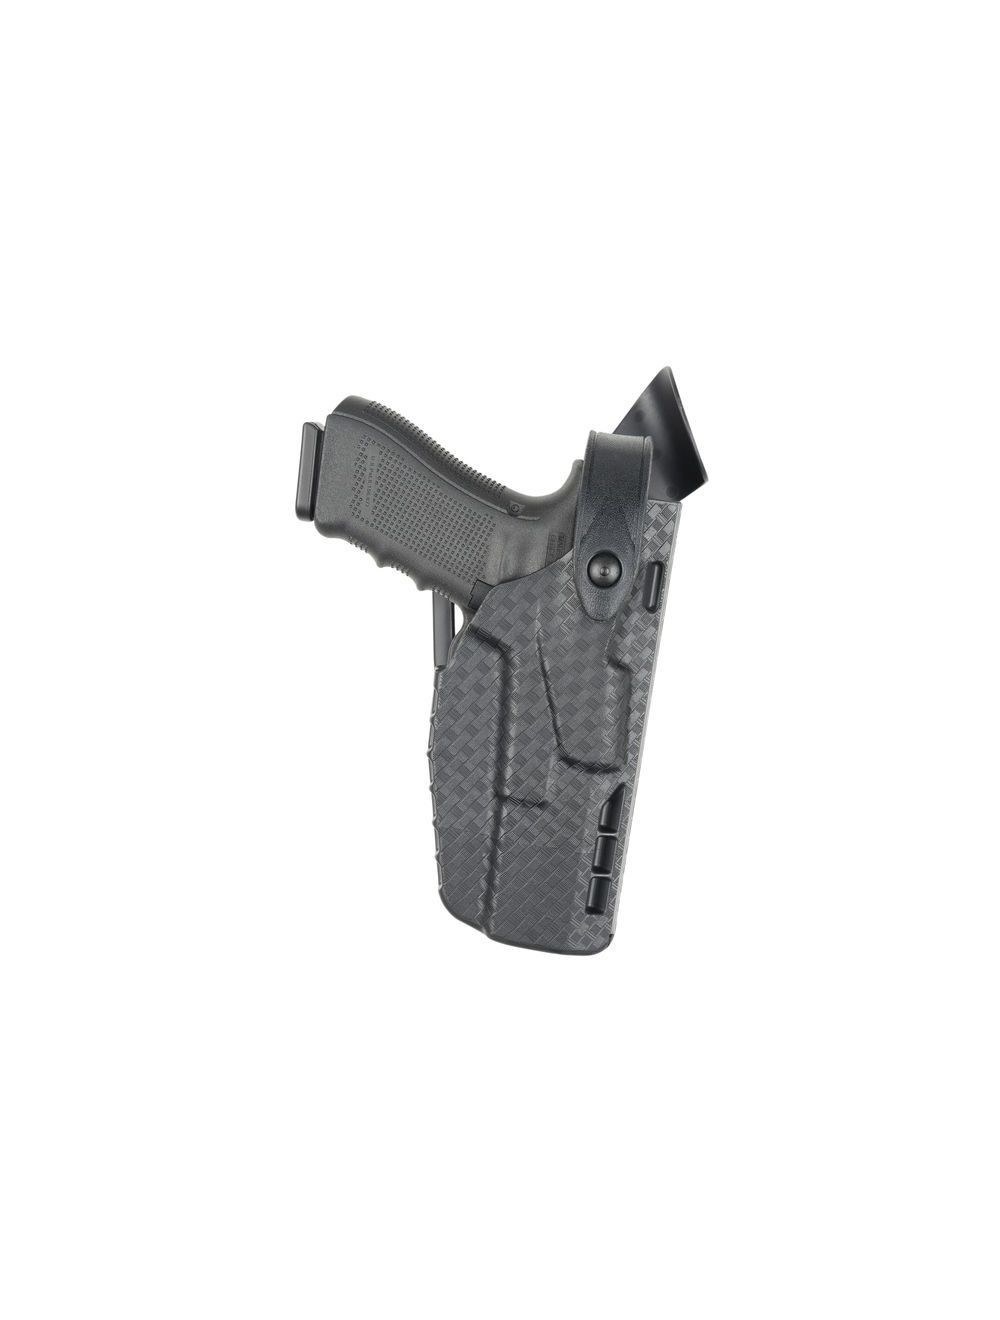 Model 7360 7TS ALS/SLS Mid-Ride Duty Holster for Glock 19 w/ Compact Light